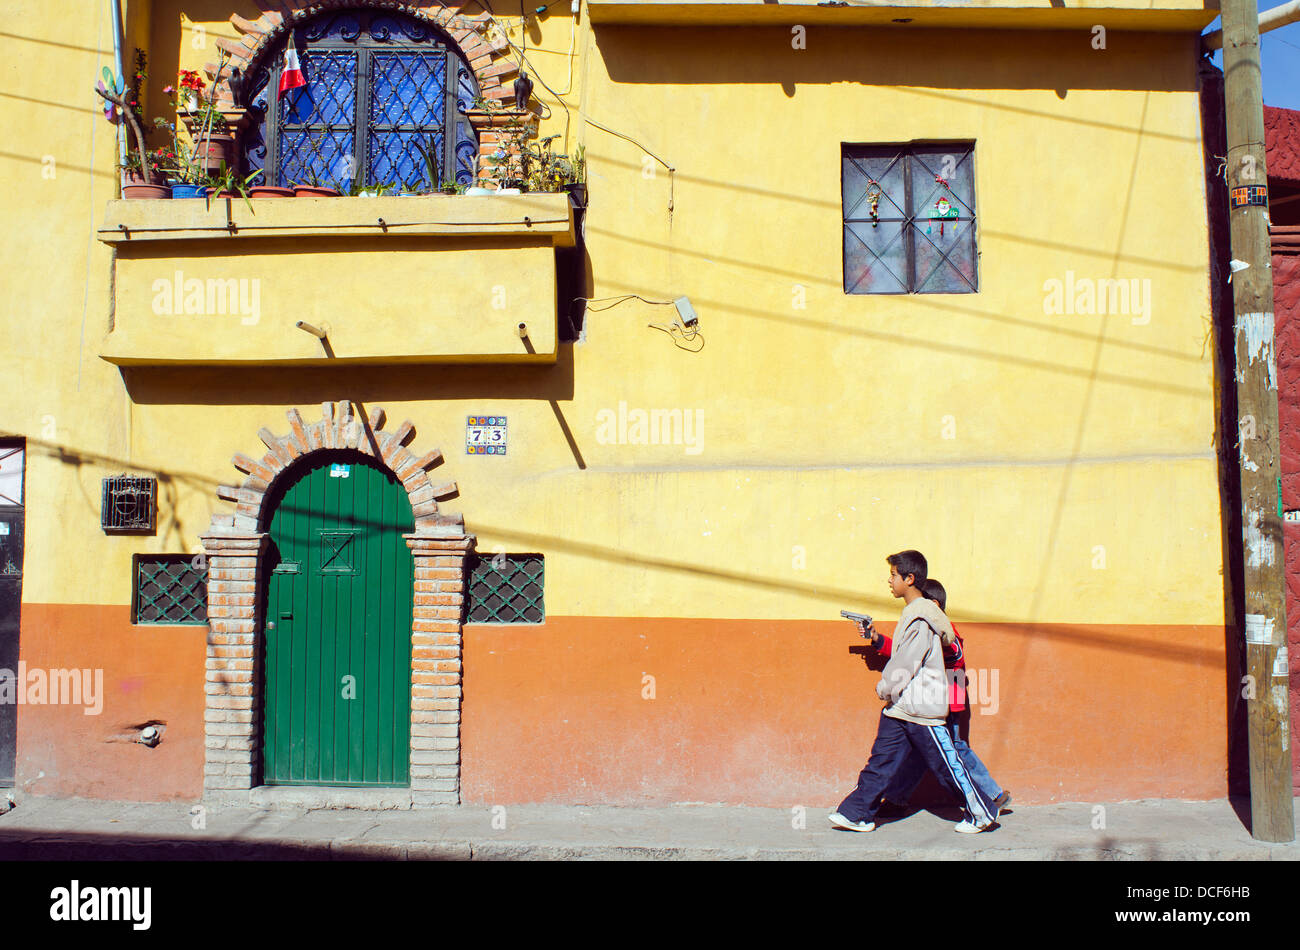 Two boys walking on sidewalk carrying gun; San Miguel de Allende, Guanajuato, Mexico Stock Photo